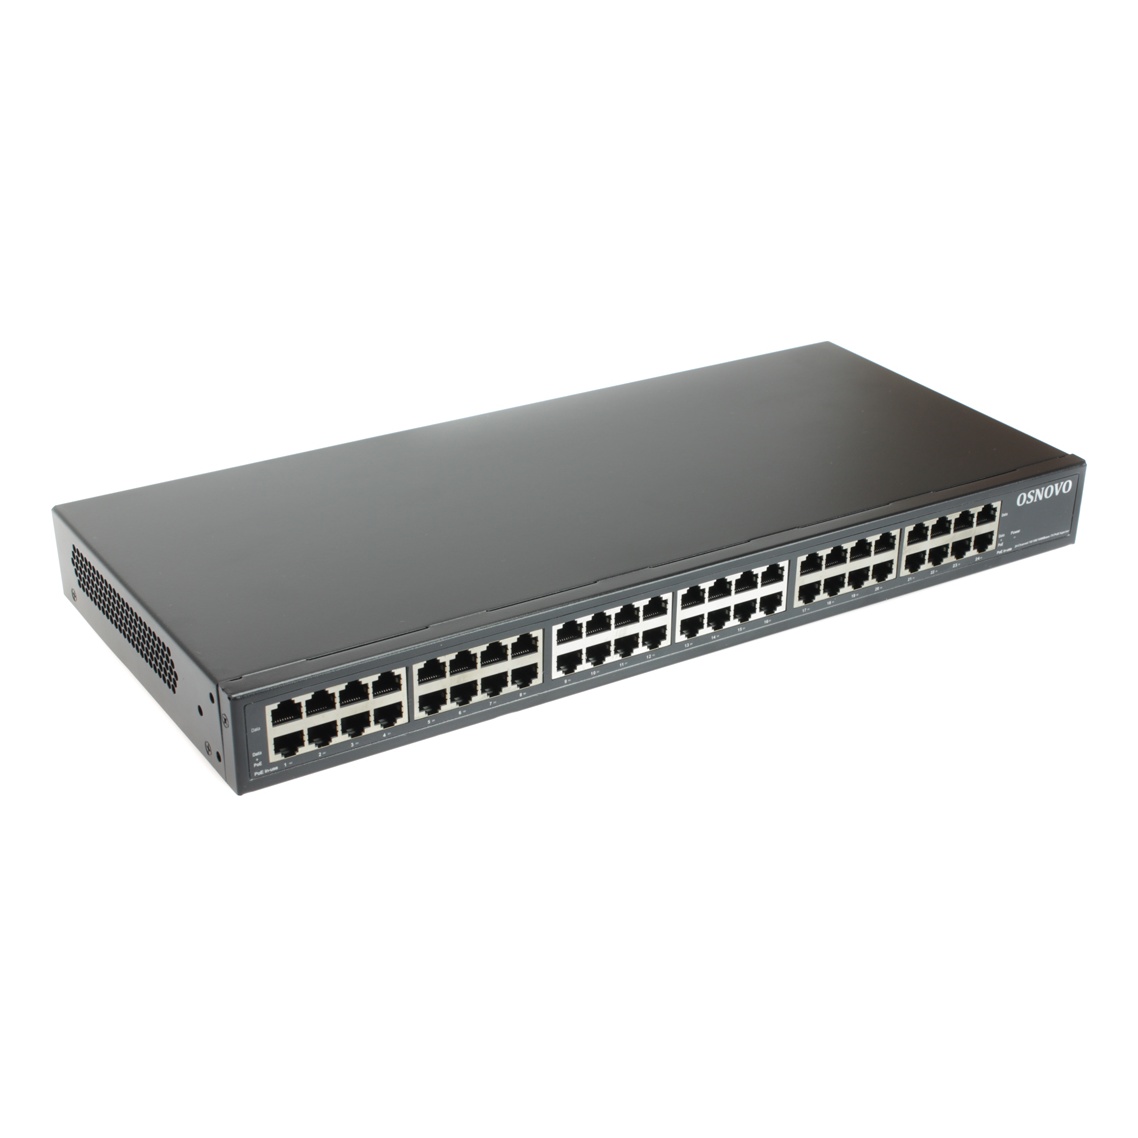 OSNOVO Midspan-24/370RG Midspan-24/370RG PoE-инжектор Gigabit Ethernet на 24 порта